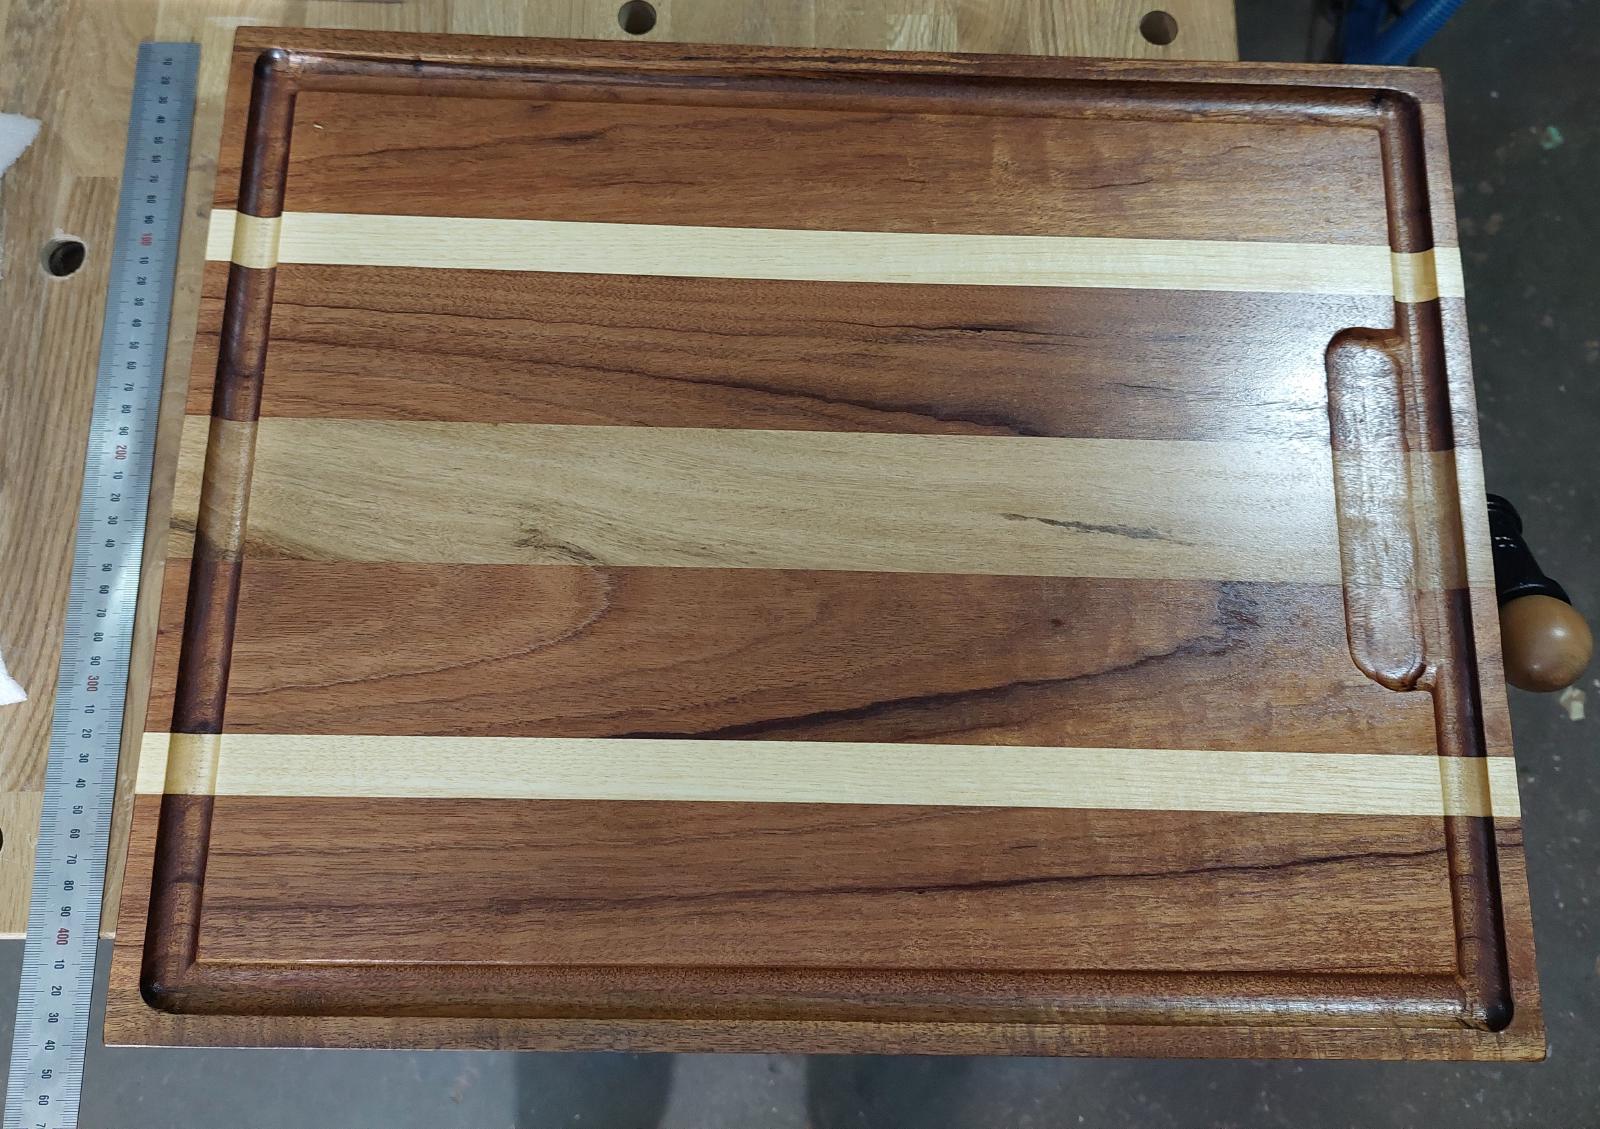 2022 - Massive cutting board - Blackwood, Silver Ash & mistery wood